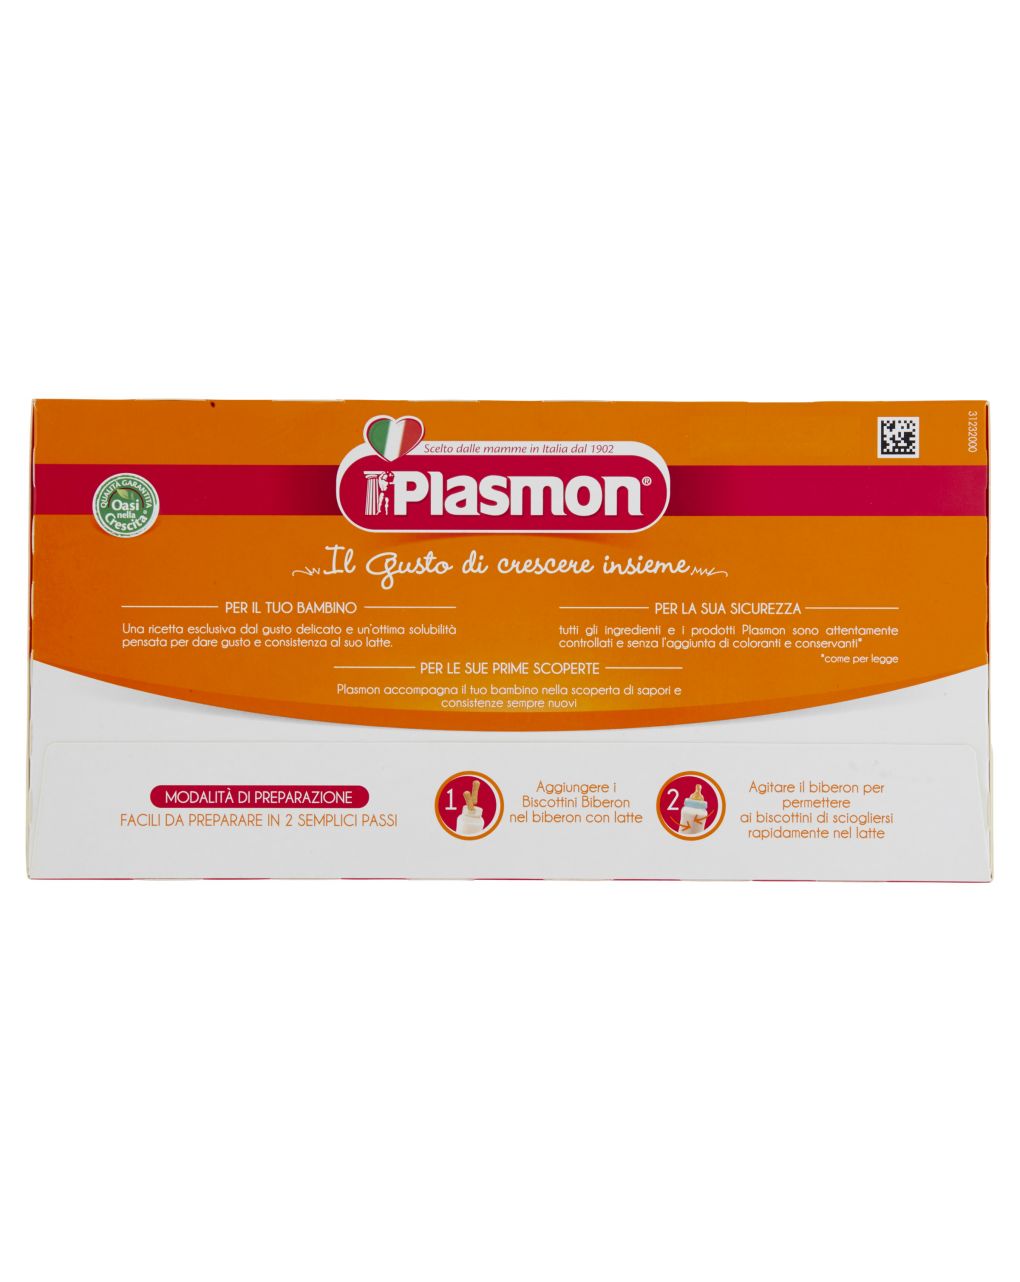 Plasmon - biscotto biberon primi mesi 600g - Plasmon